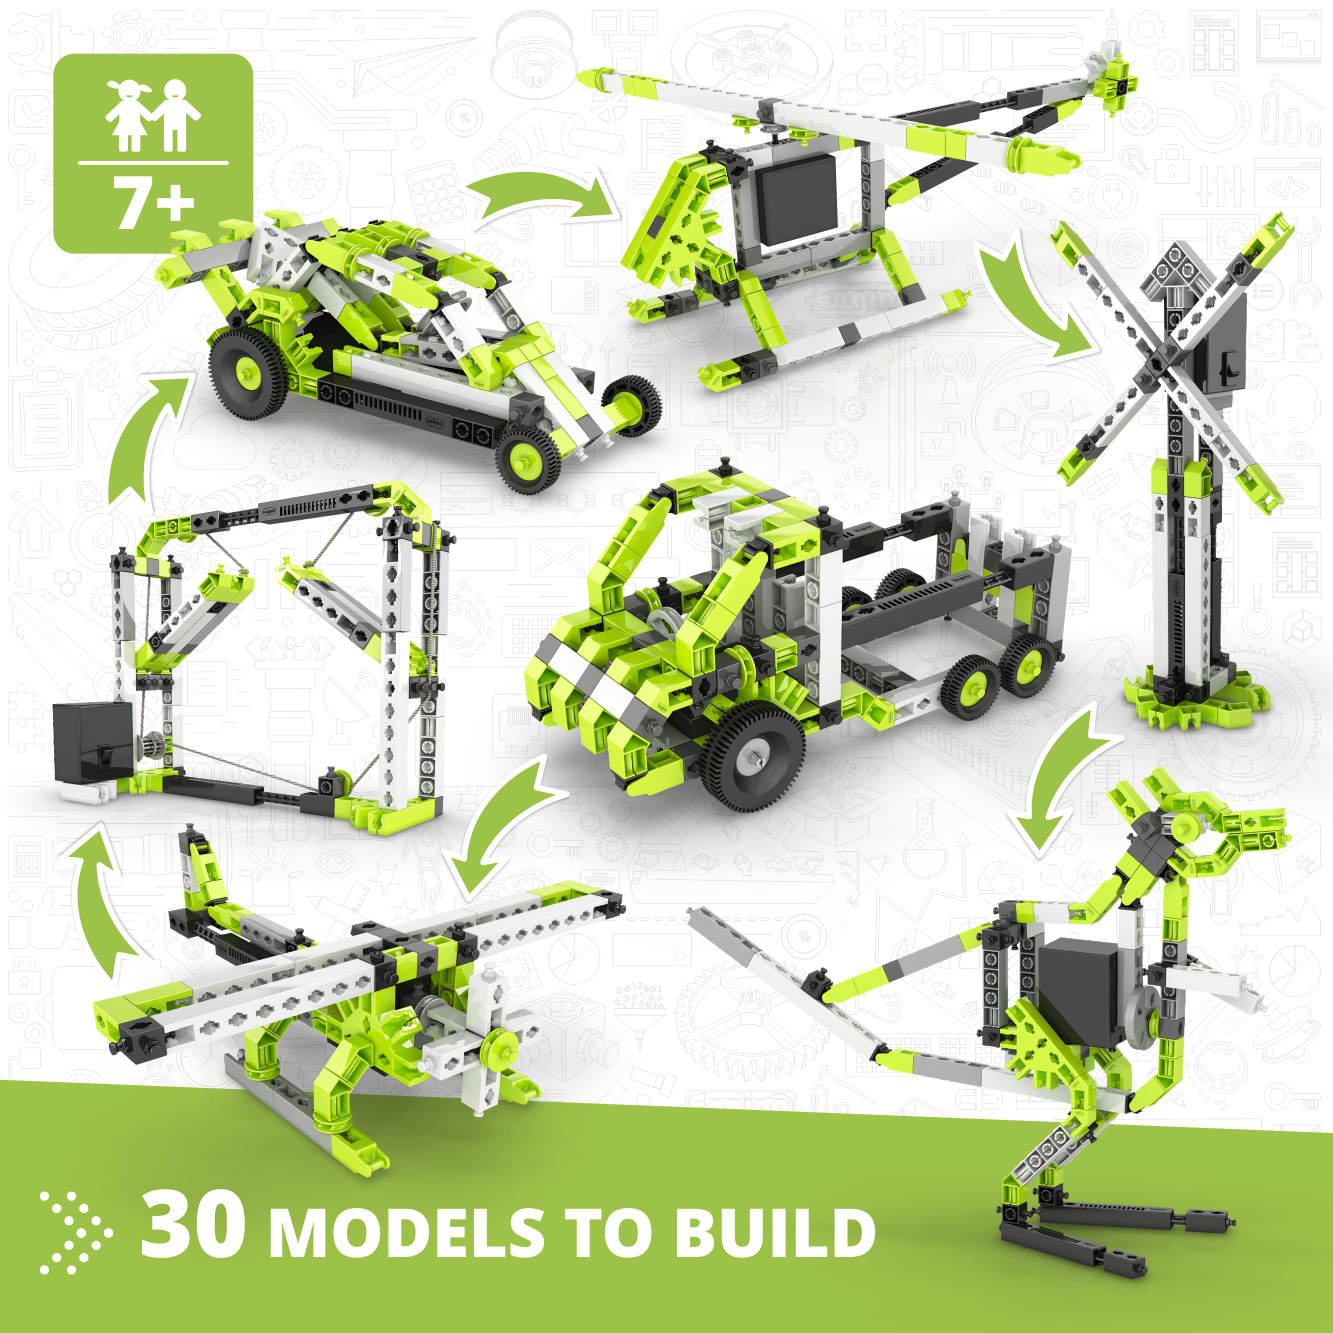 CREATIVE BUILDER – 30 MODELS MULTIMODEL SET - Engino's innovative STEM building kit for Ages 6+